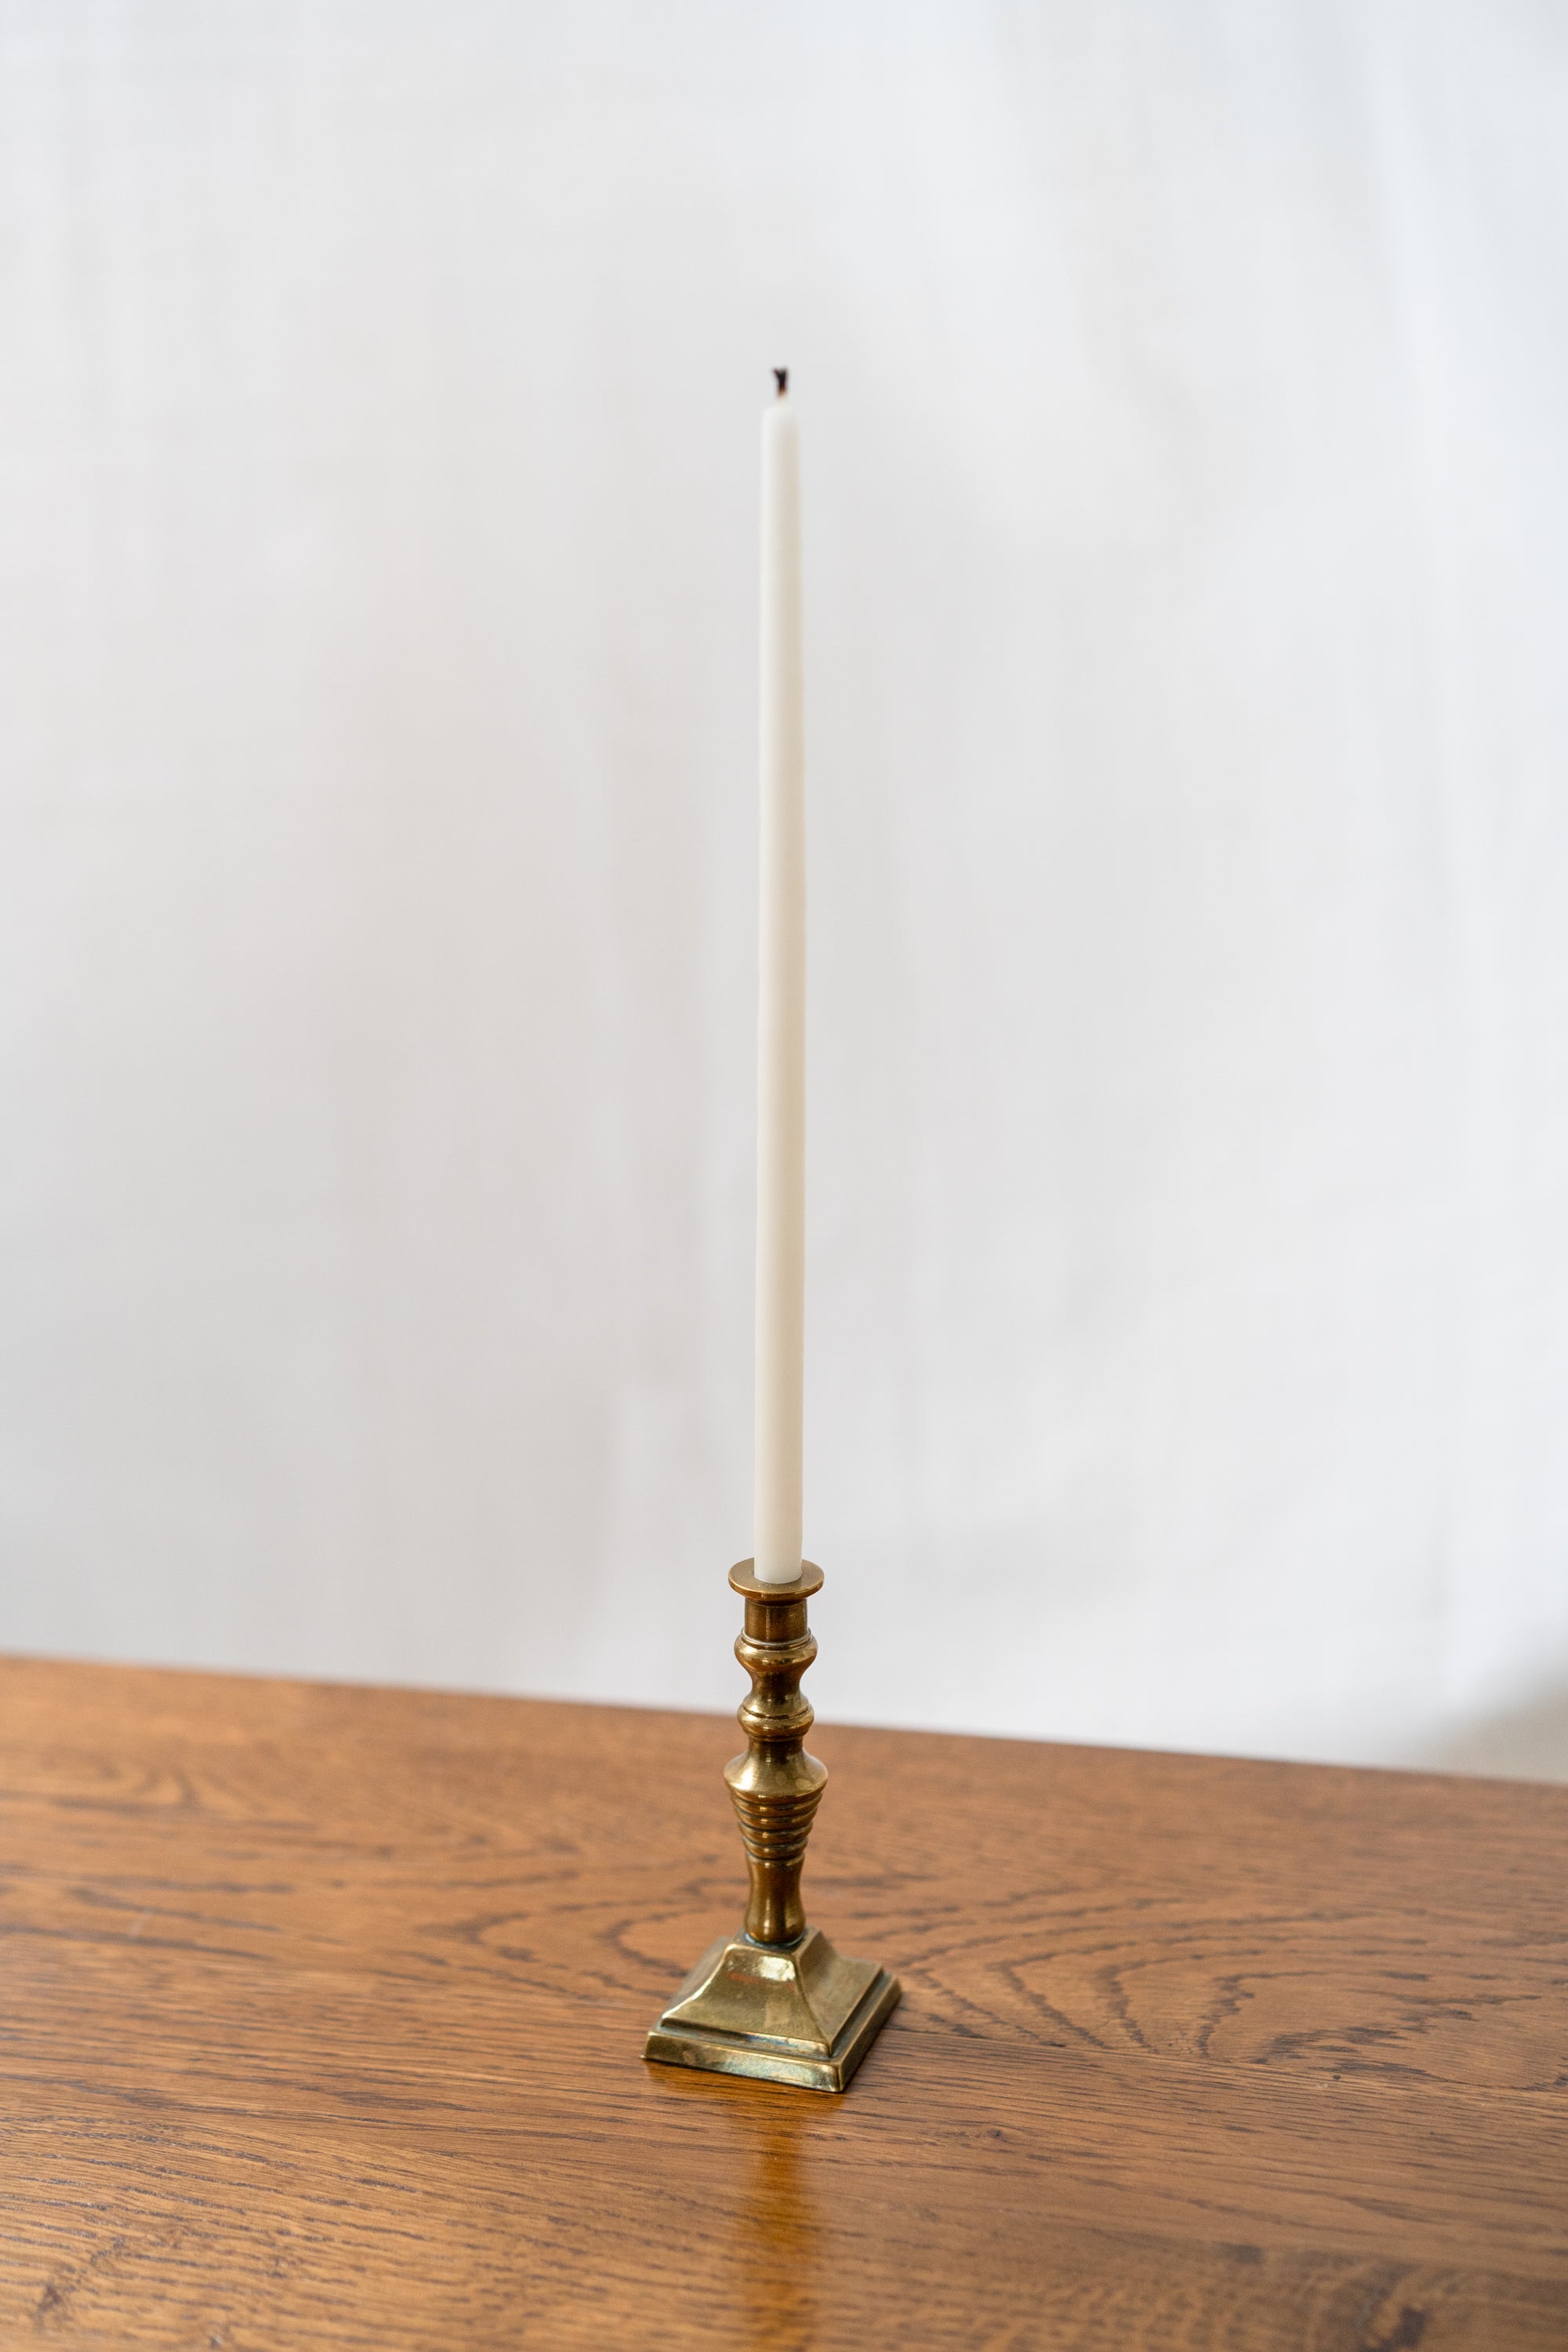 Small Brass Candlestick